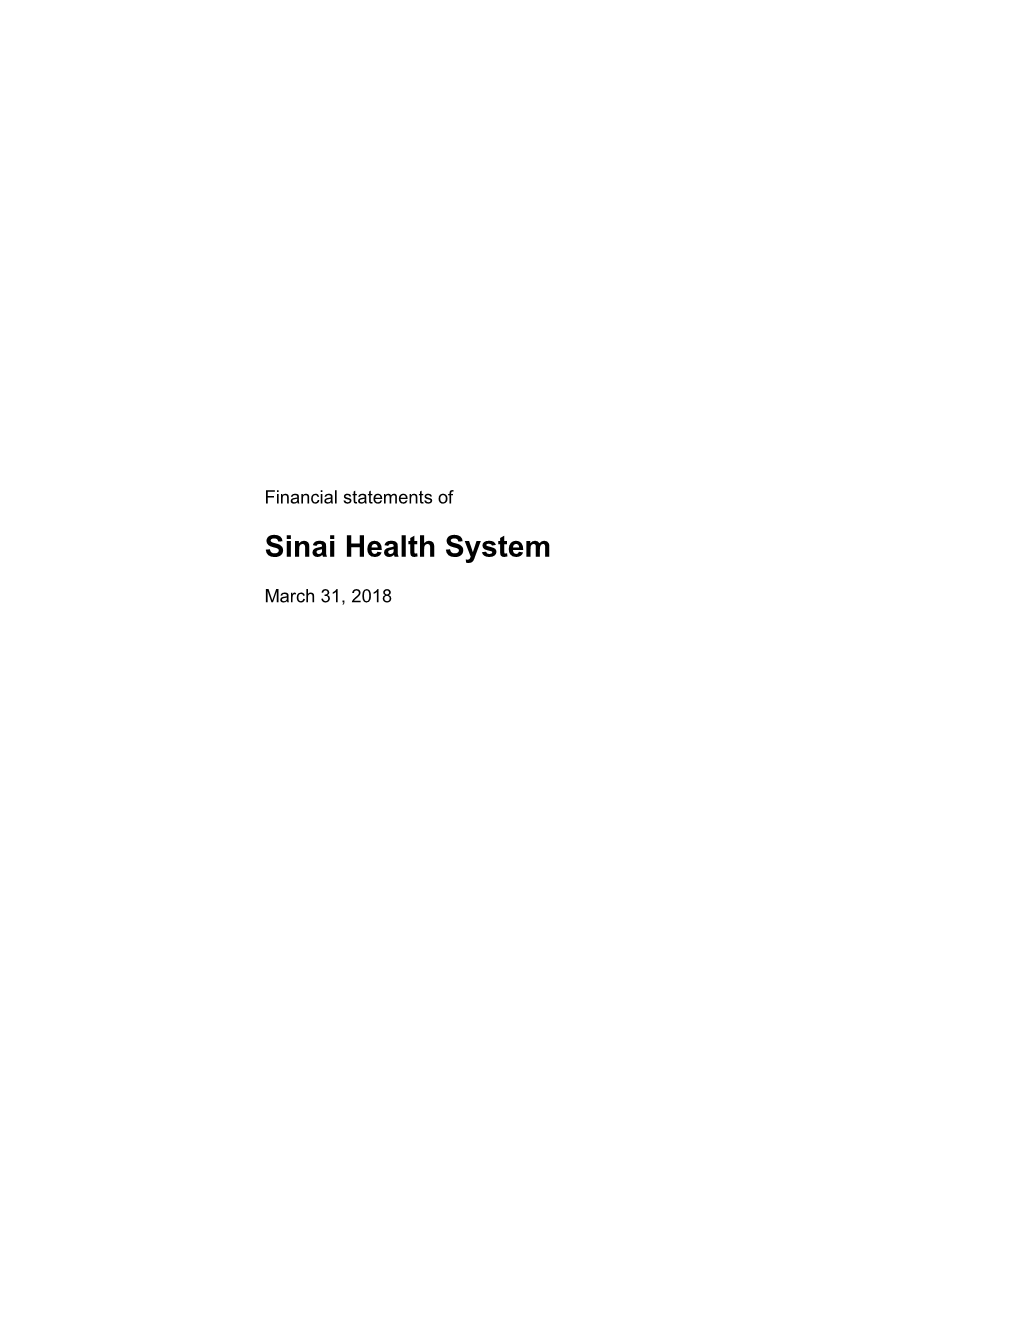 Sinai Health System